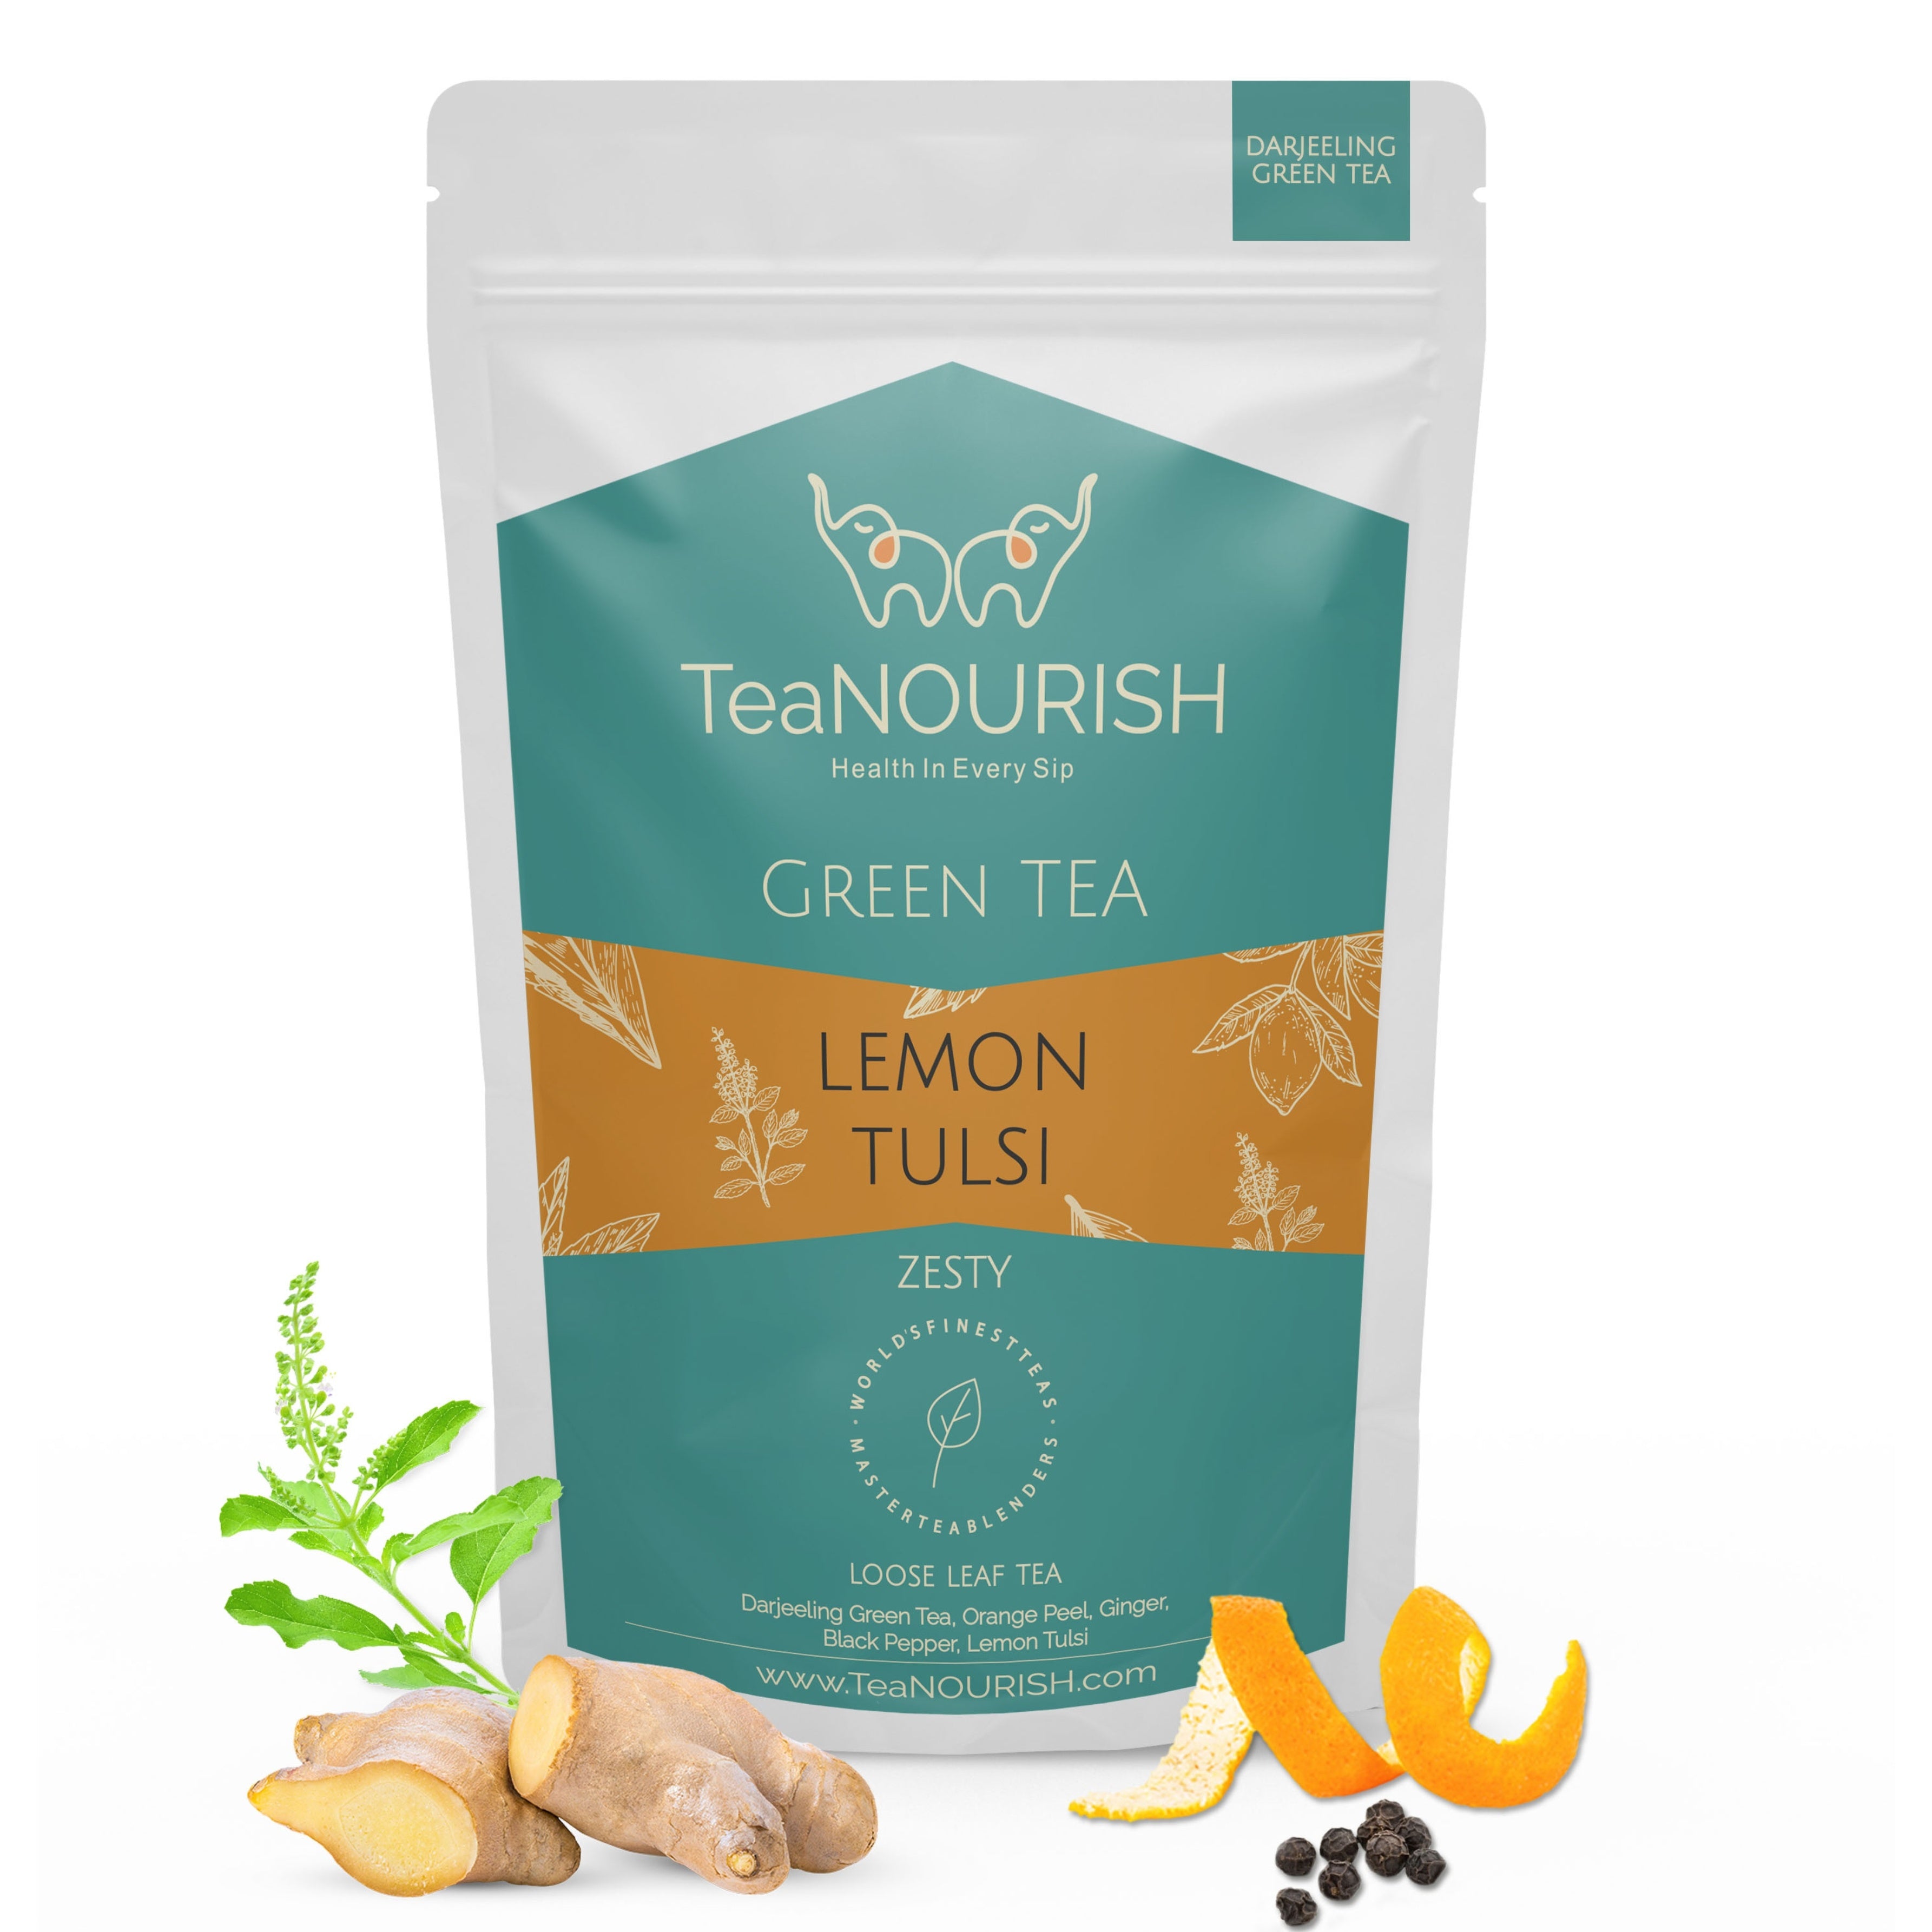 Lemon Tulsi Green Tea Product Picture